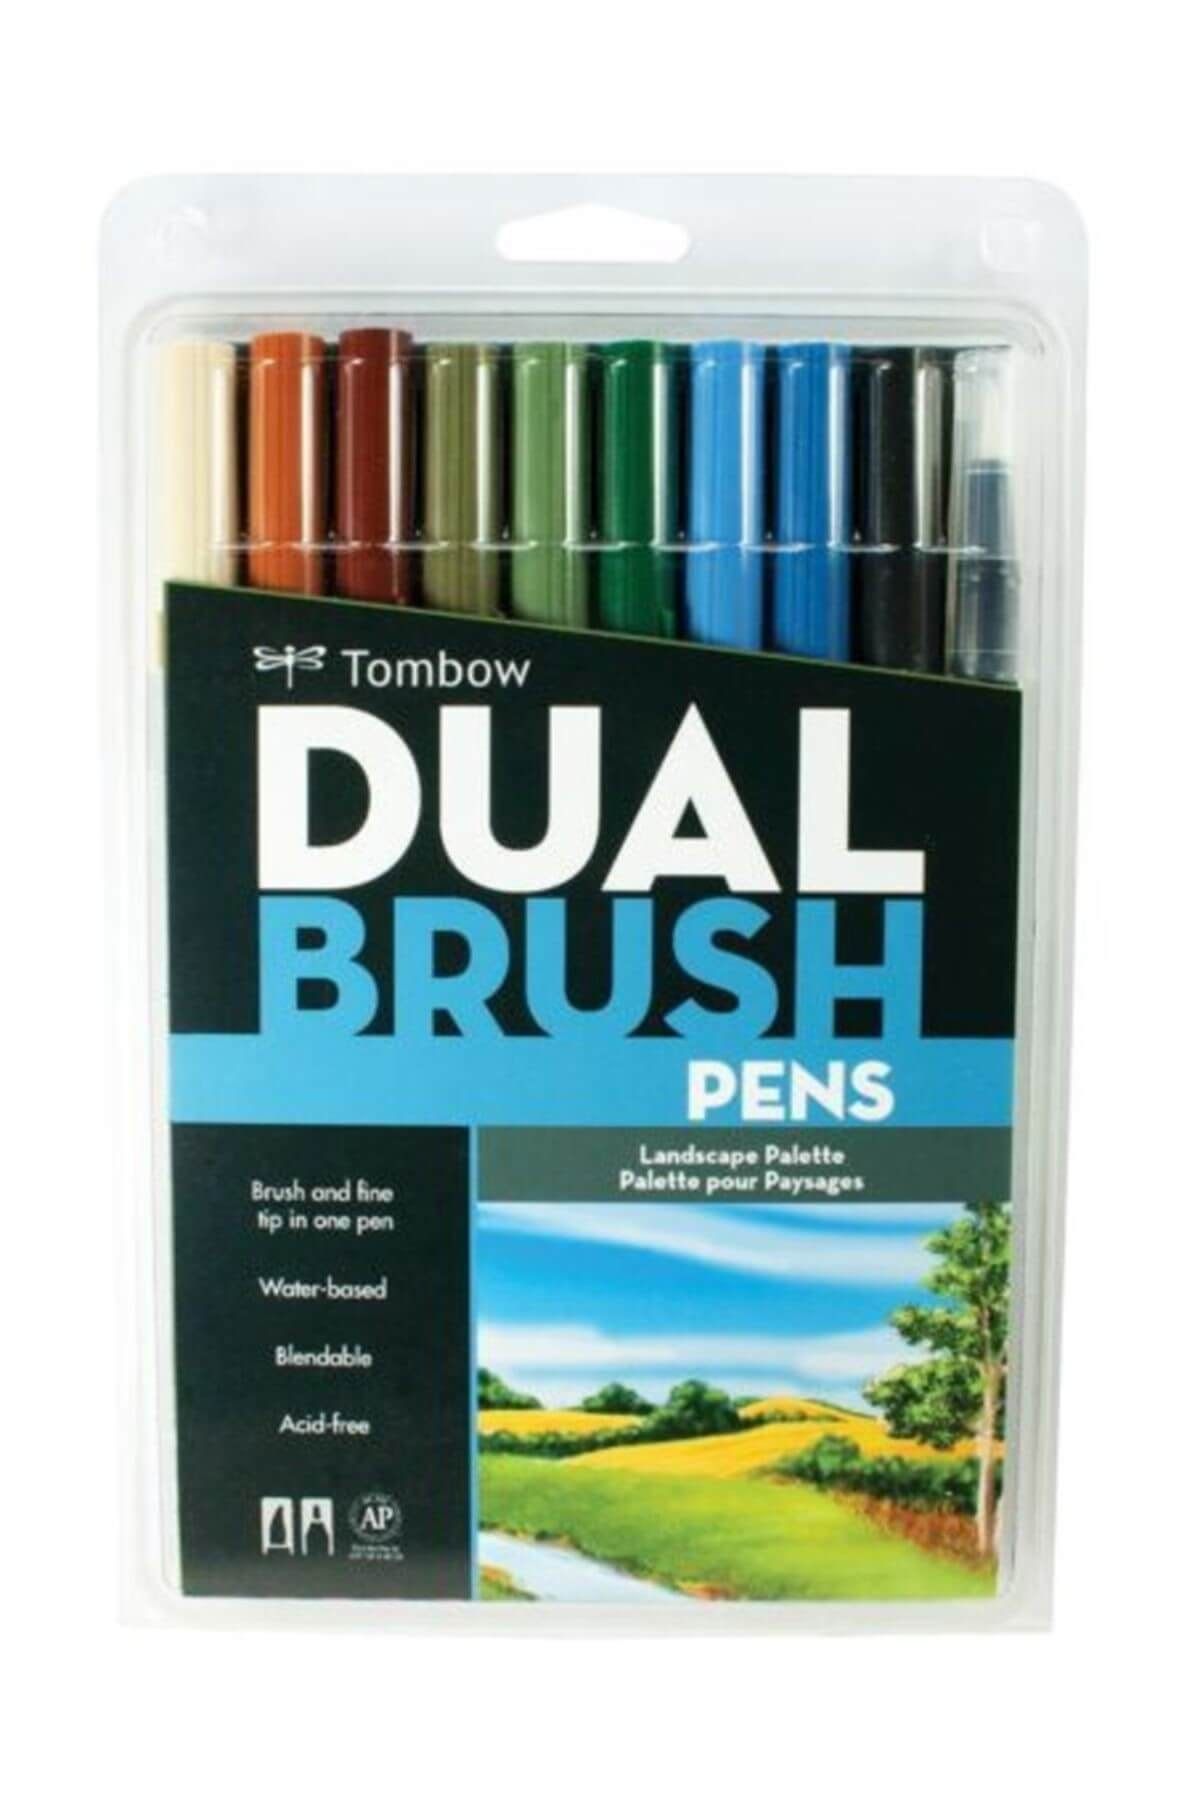 Tombow Dual Brush Pen 10 Renk Set Landscape